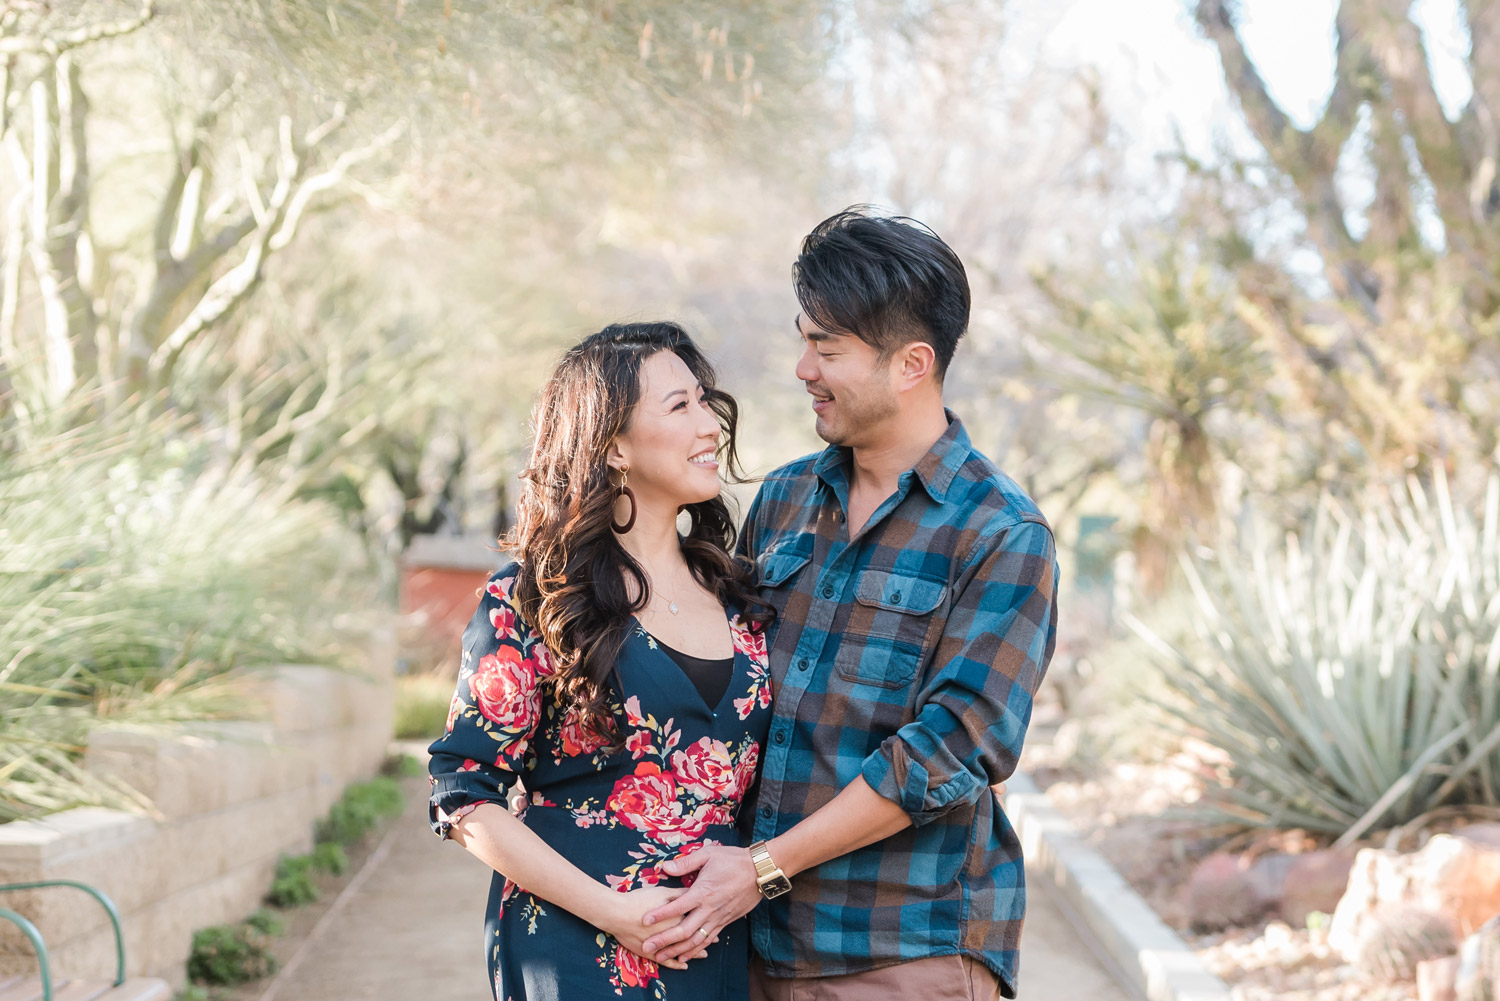 Springs Preserve Maternity Session | Kristen Marie Weddings + Portraits | Las Vegas Maternity Photographer